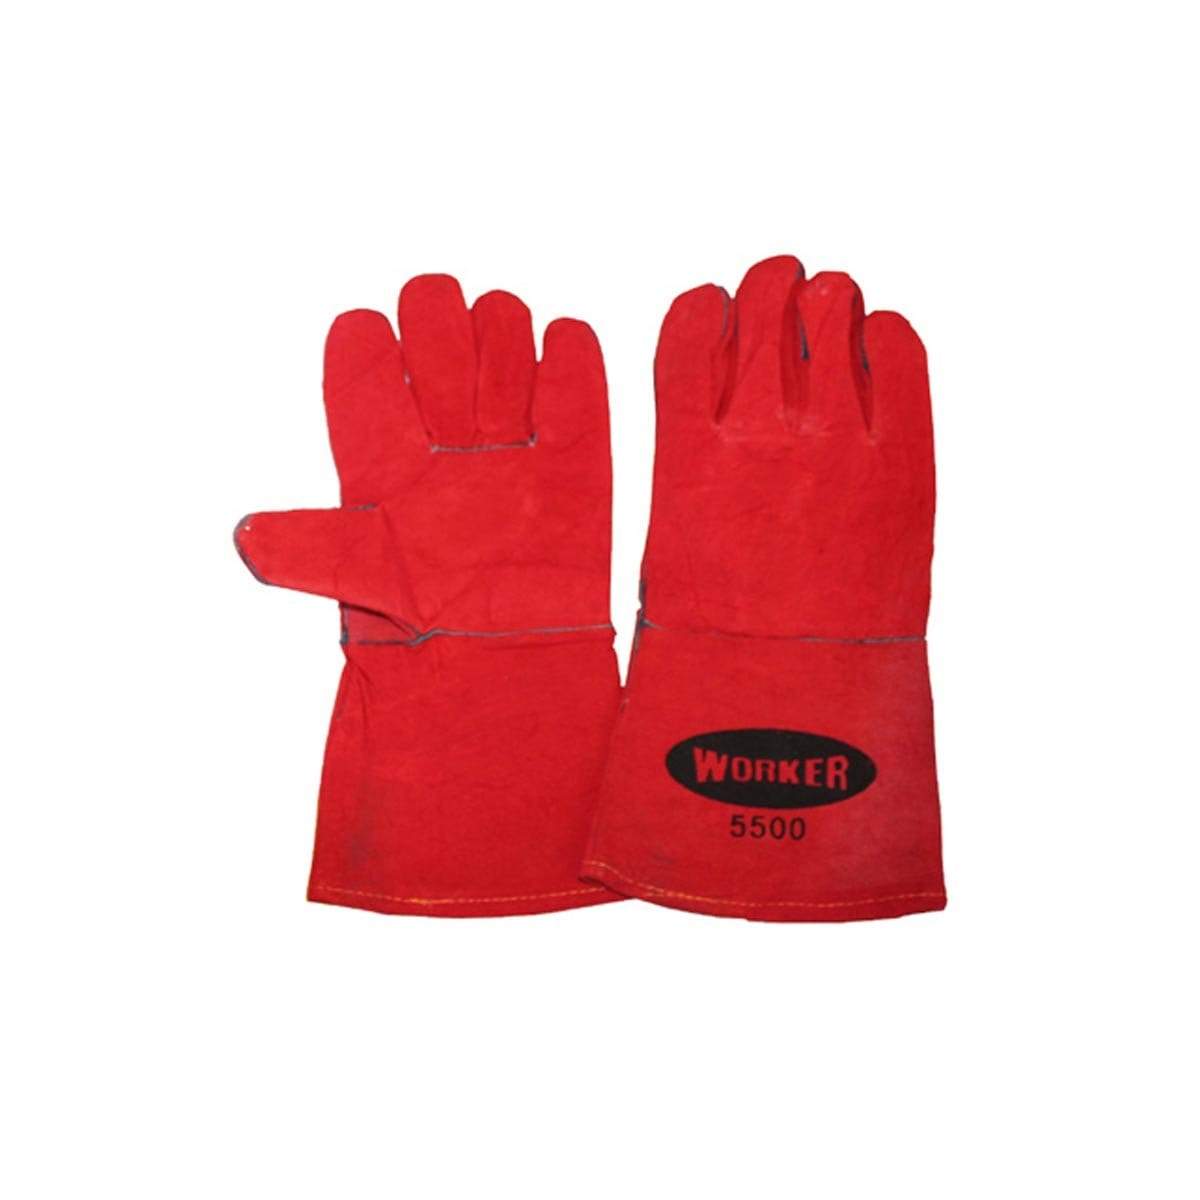 WORKER Red Welding Gloves GR5500